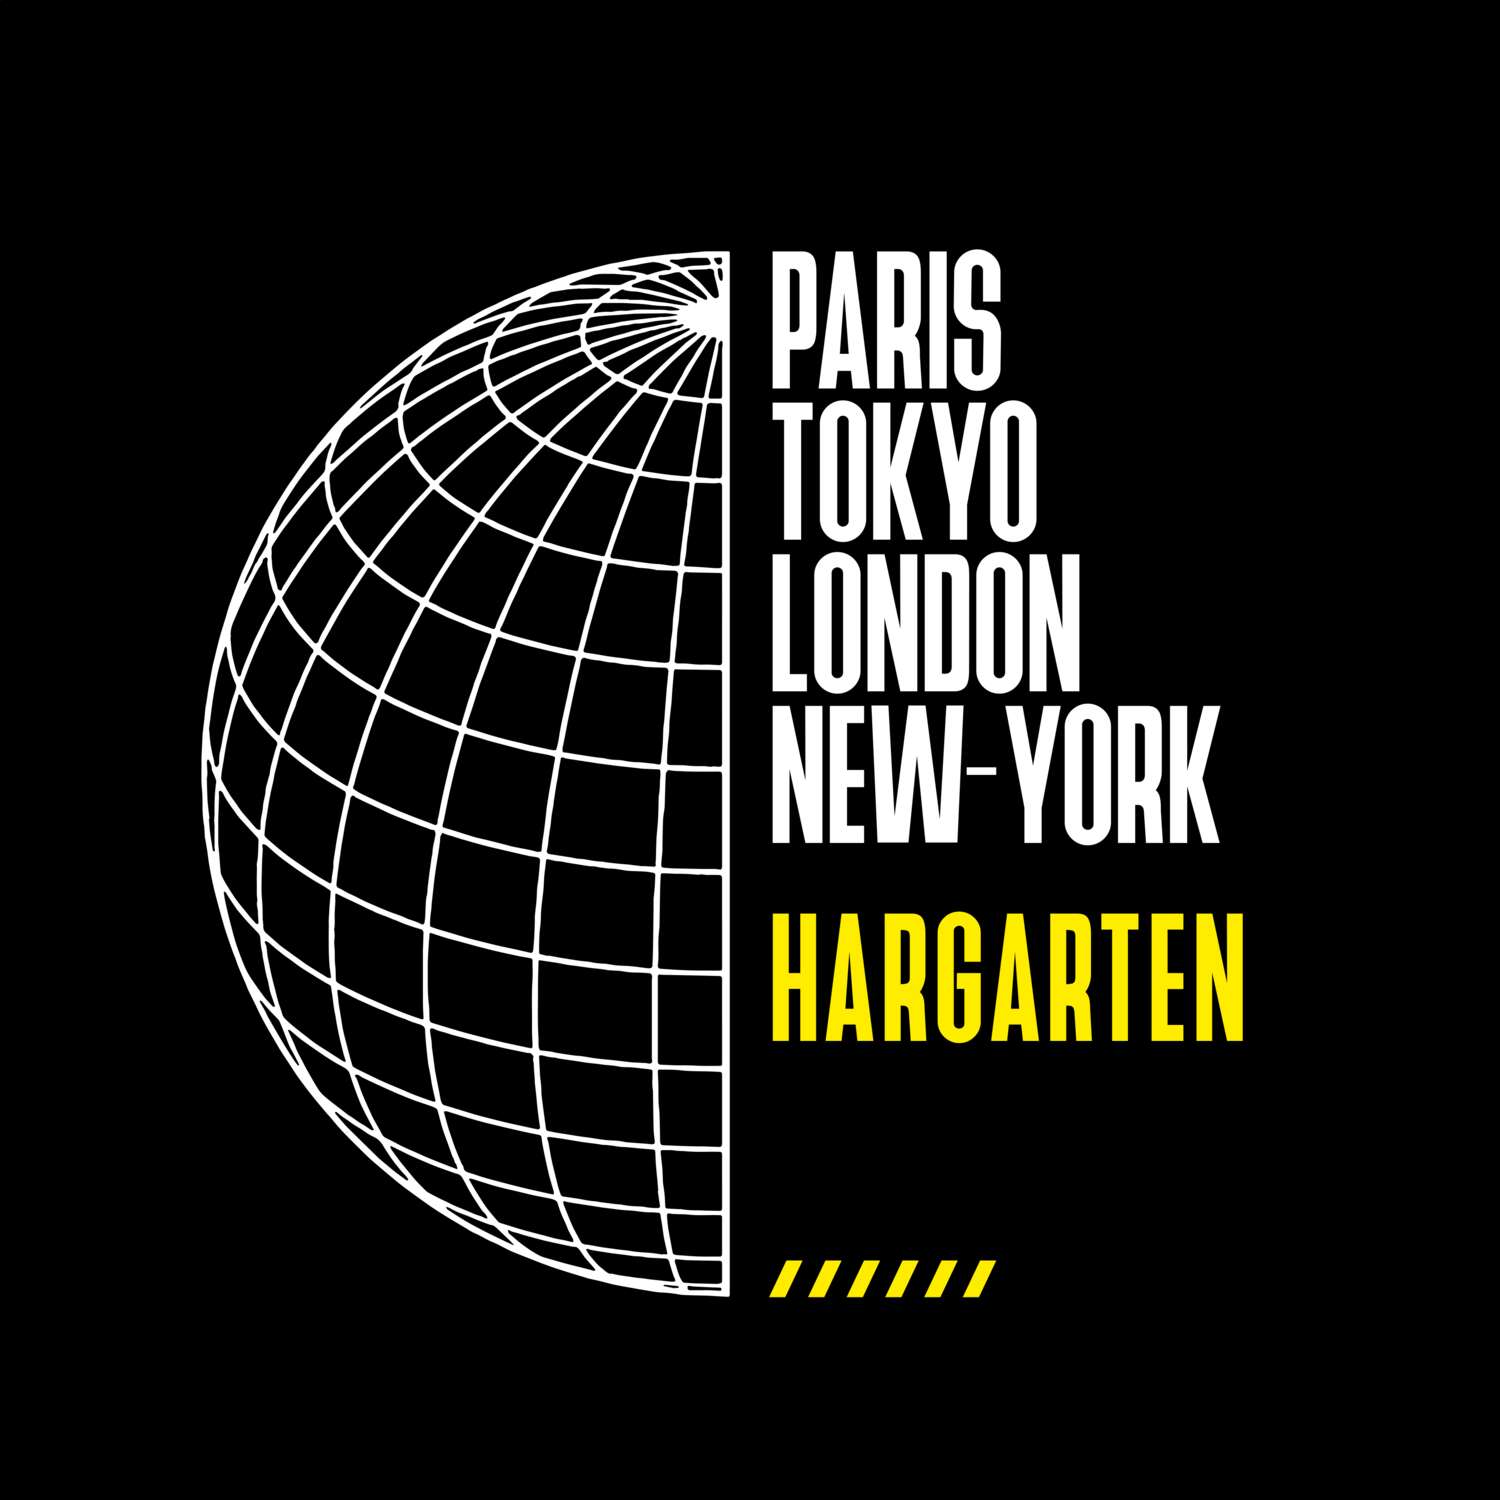 Hargarten T-Shirt »Paris Tokyo London«